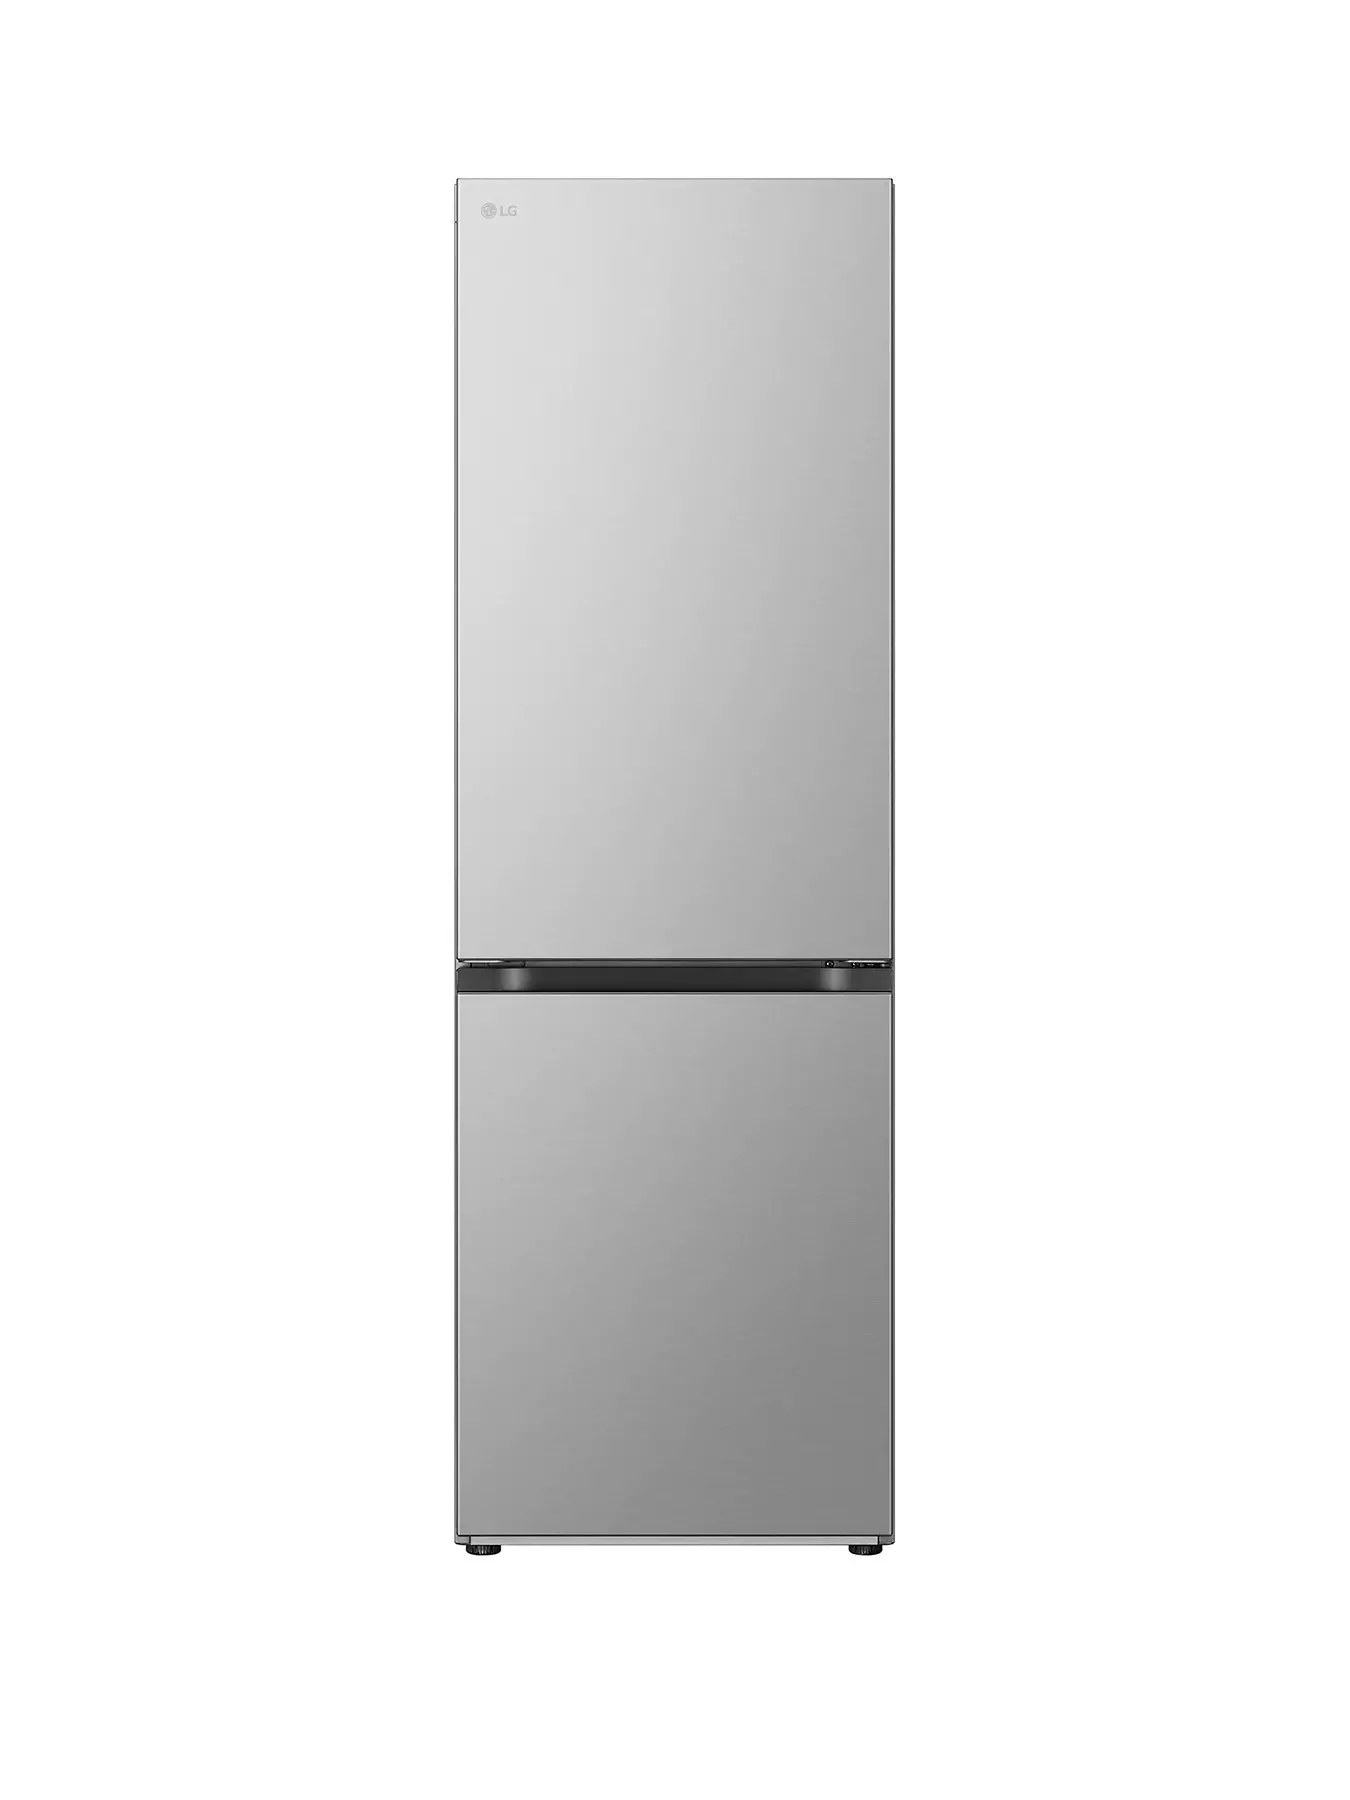 LG NatureFRESH GBV3200DPY 60cm Wide Fridge Freezer - Prime Silver